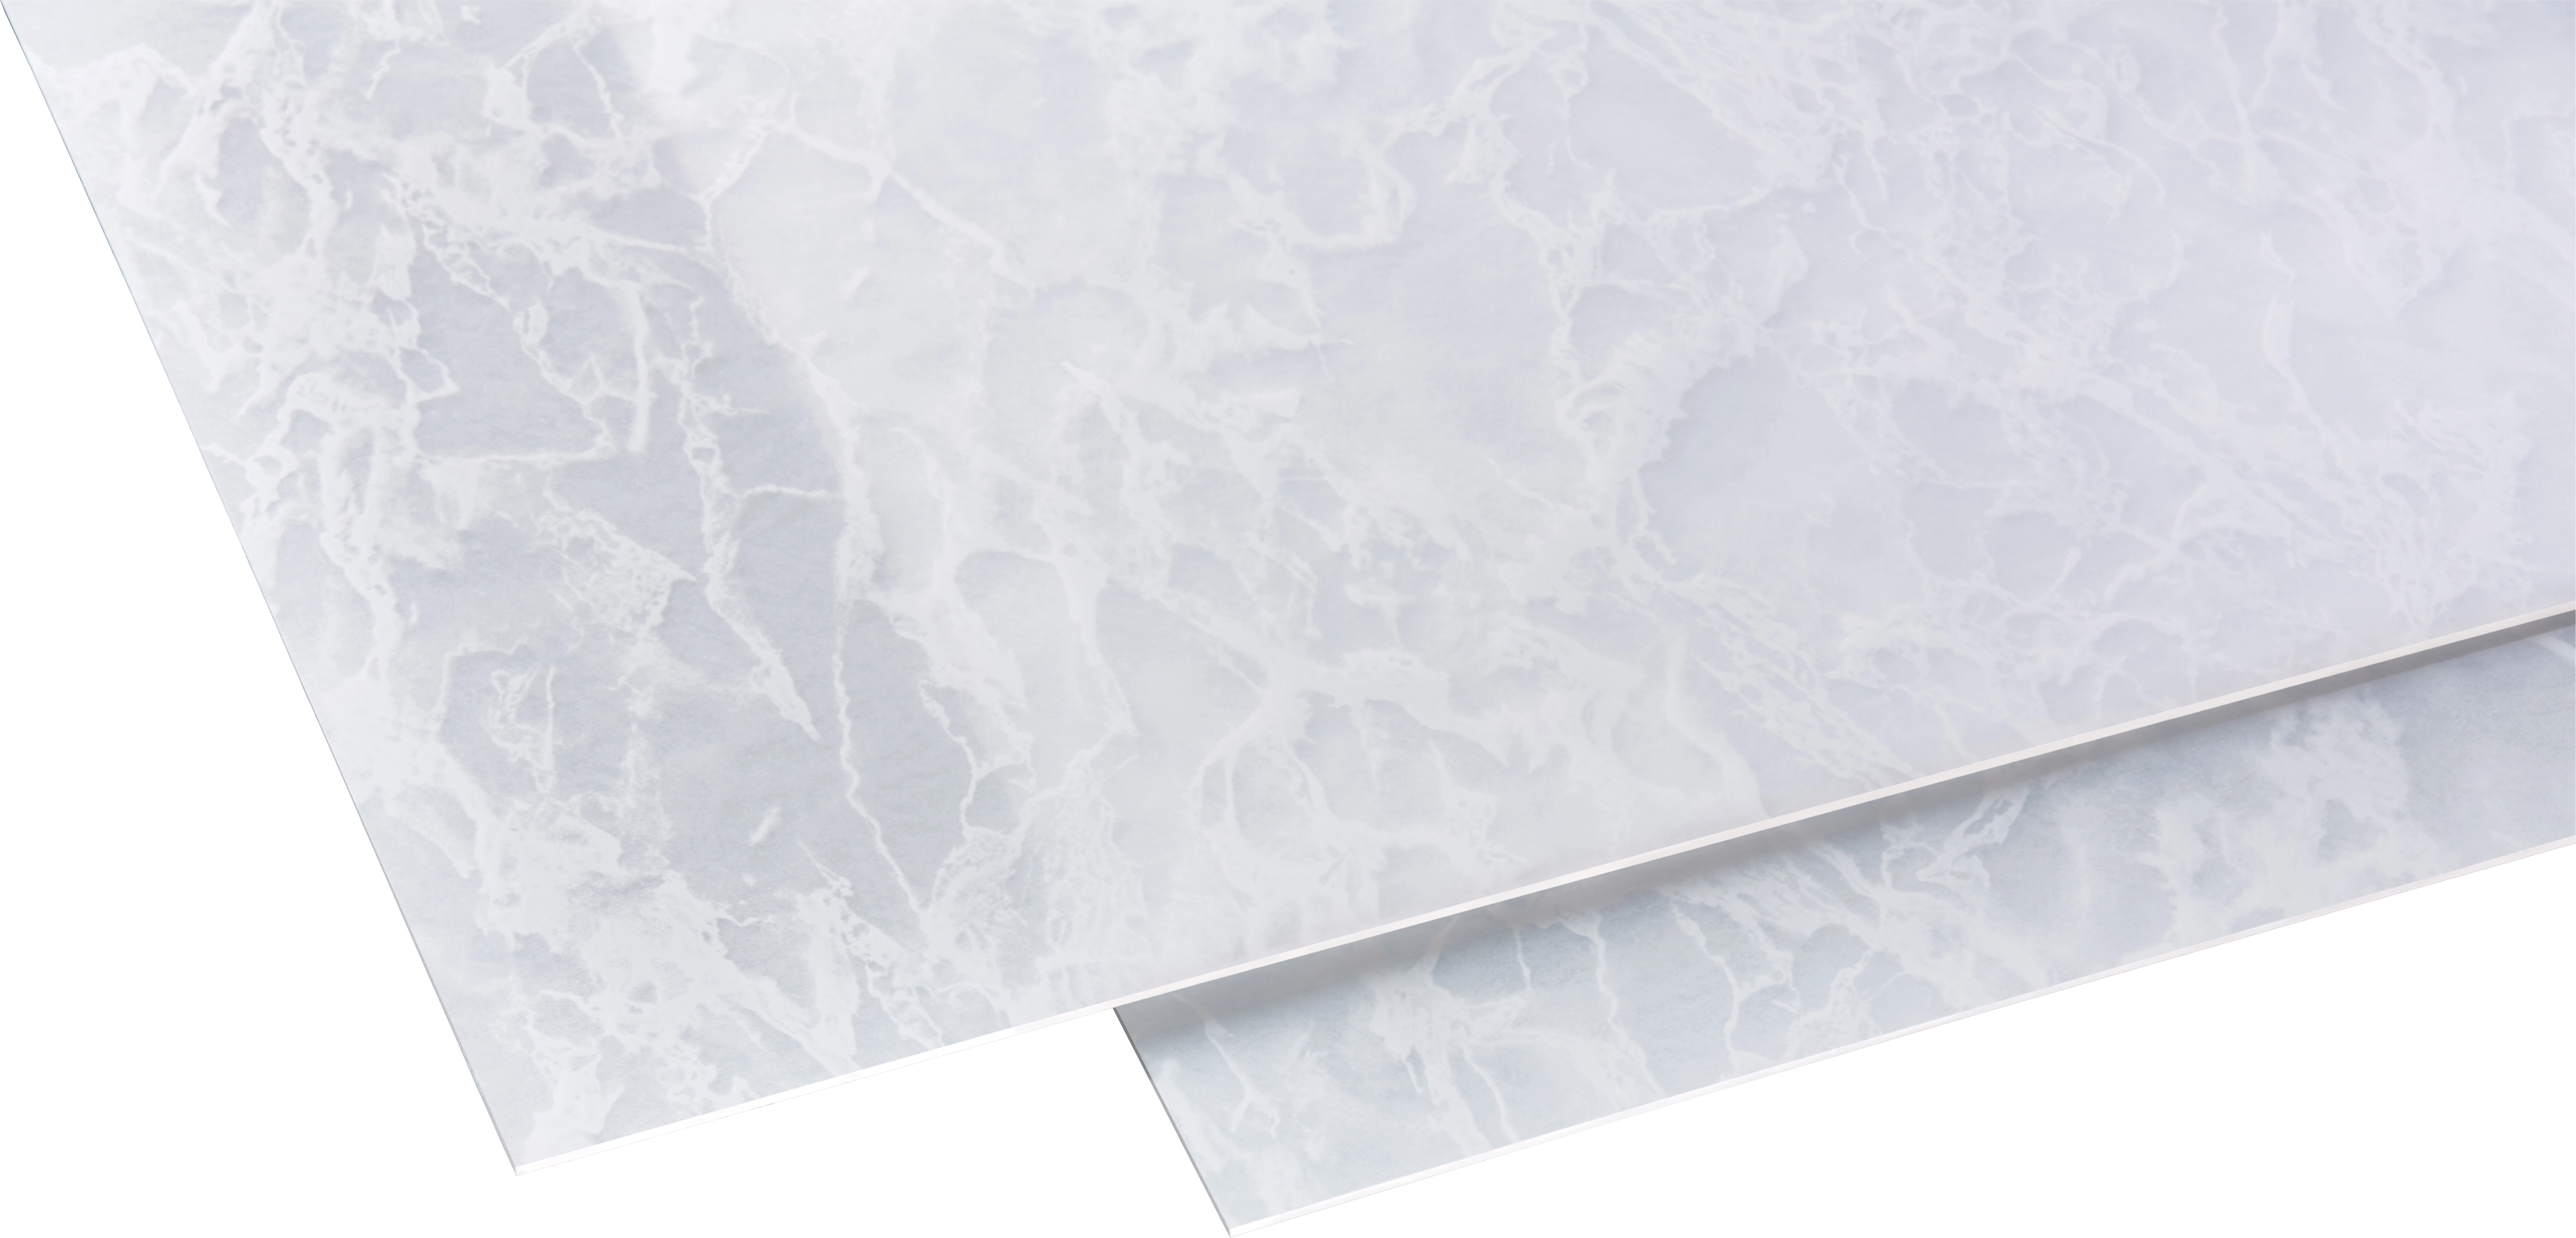 Polystyrol-Platte 2,5 mm Marmor weiß 1000 mm x 1000 mm kaufen bei OBI